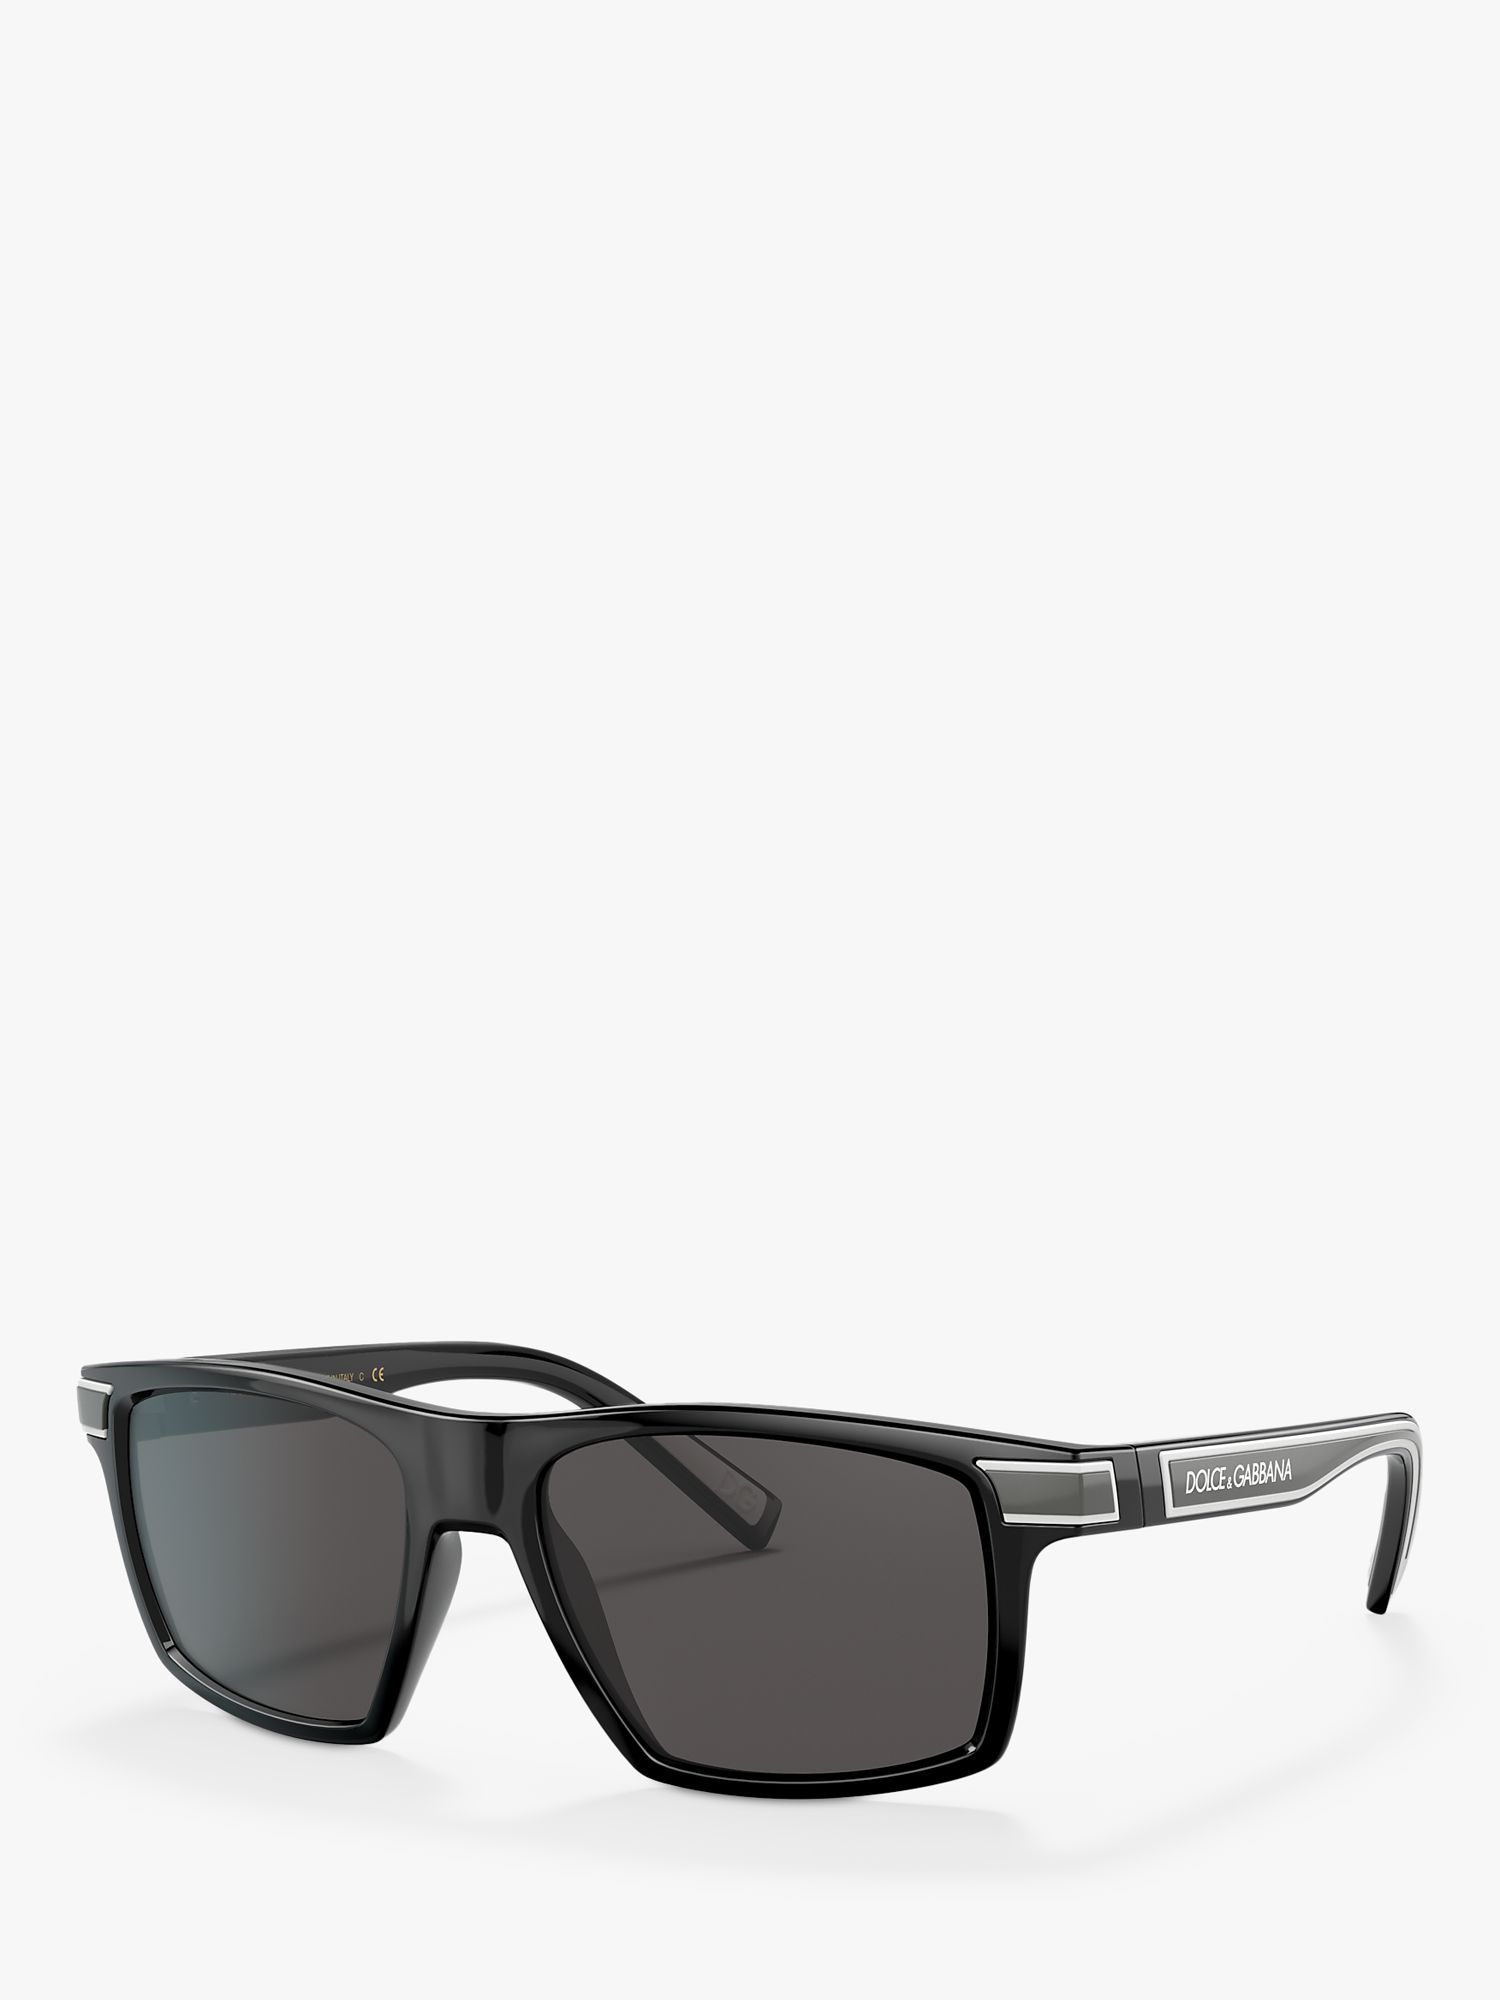 Buy Dolce & Gabbana DG6160 Men's Polarised Square Sunglasses, Grey Online at johnlewis.com